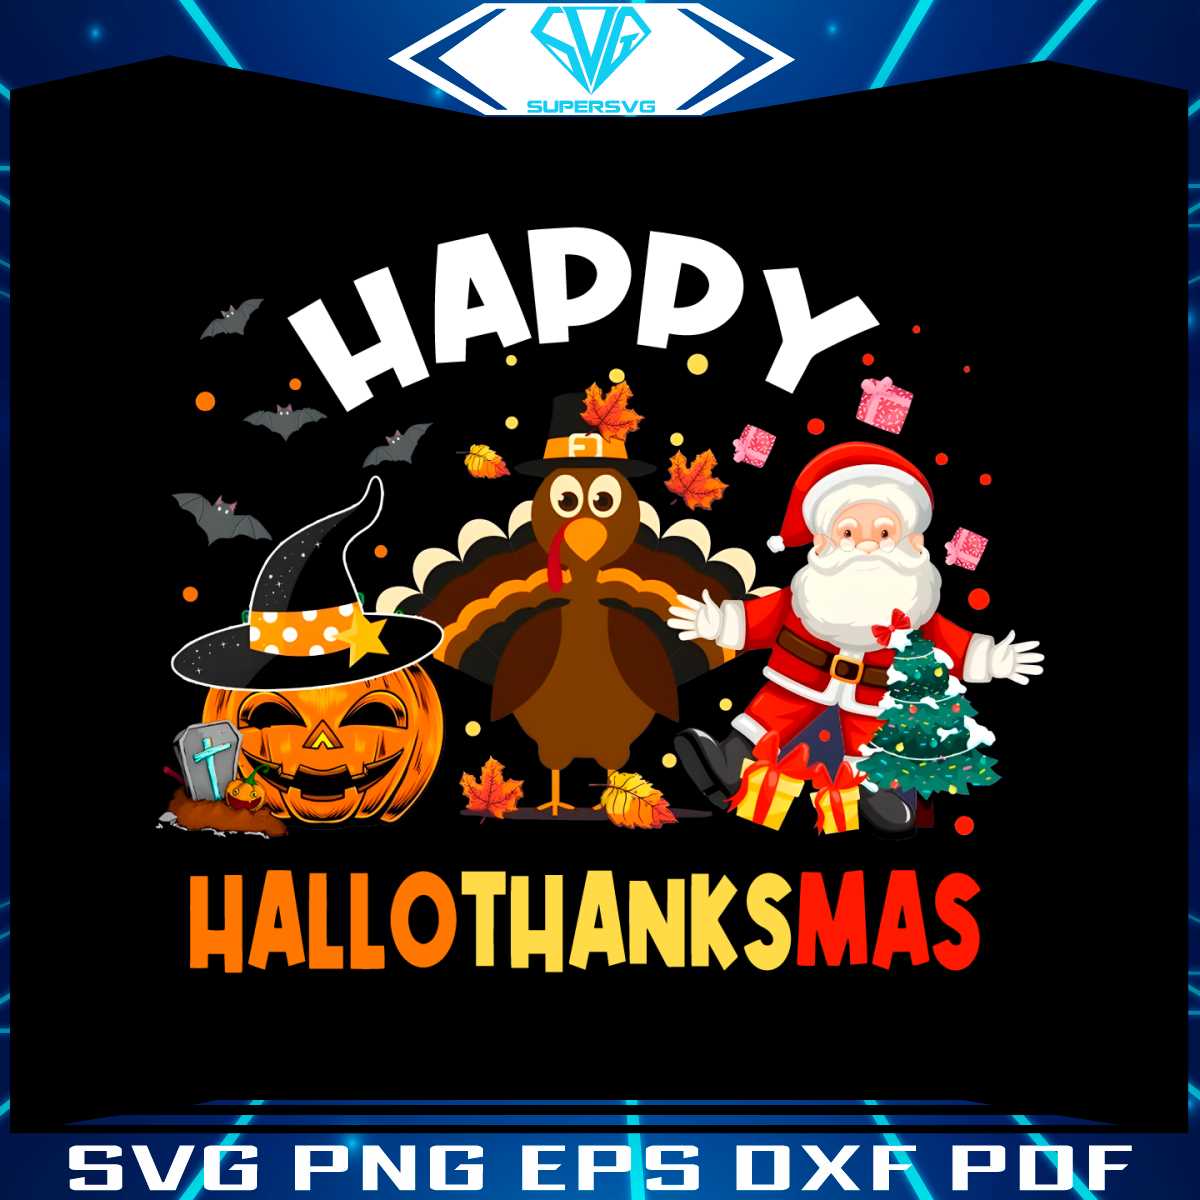 happy-hallothanksmas-icon-png-sublimation-download